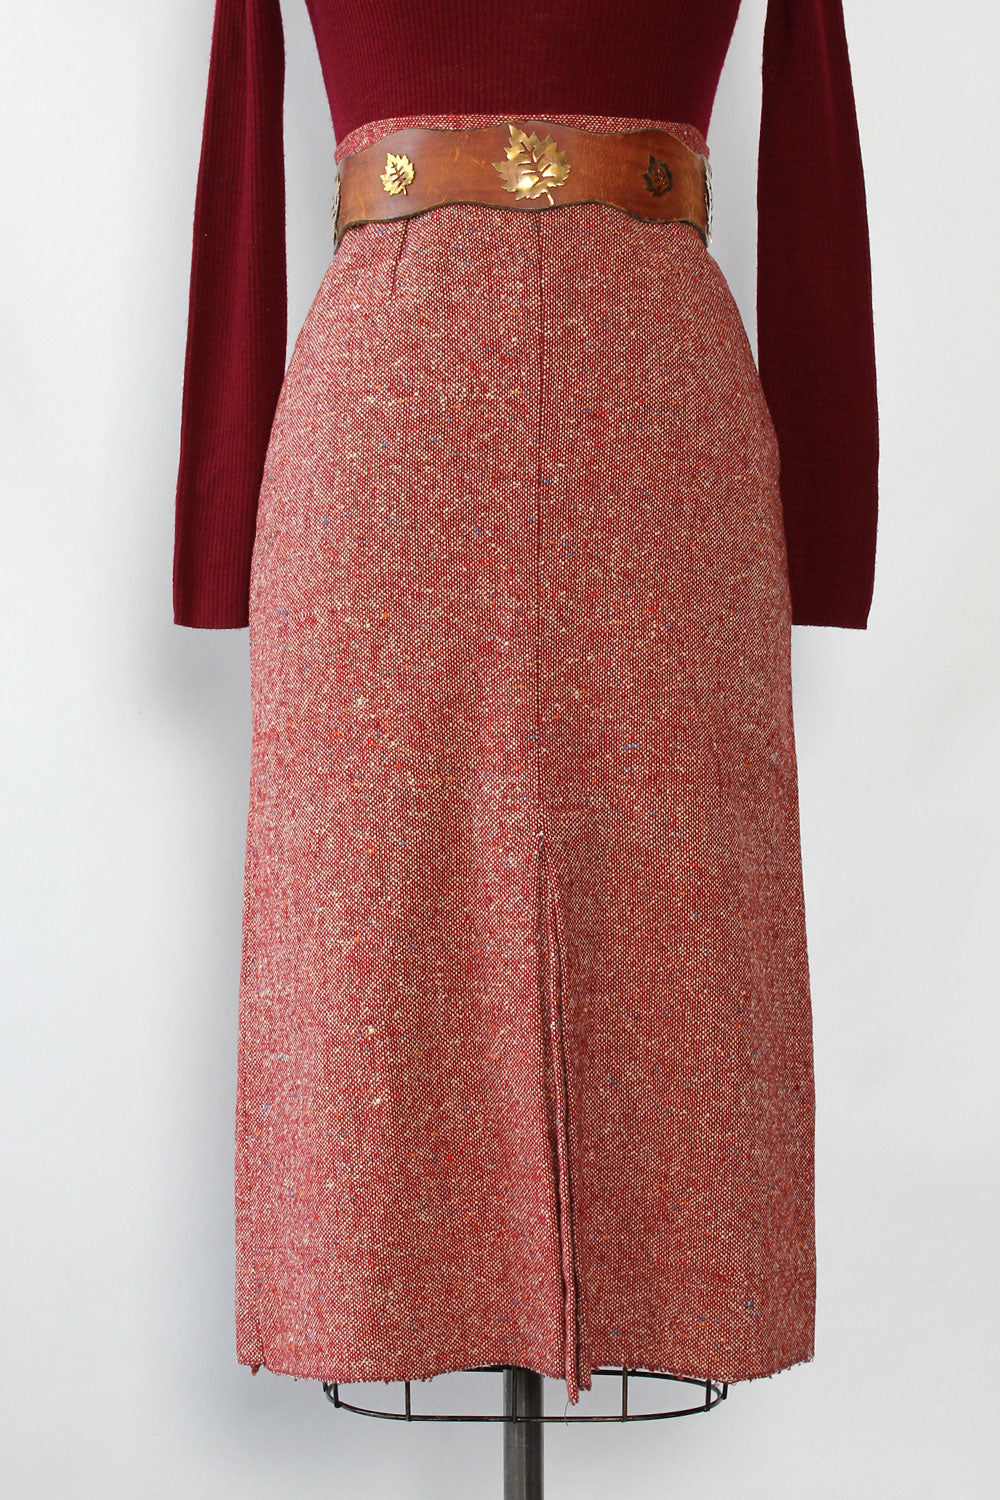 Cranberry Tweed Slit Skirt XS/S